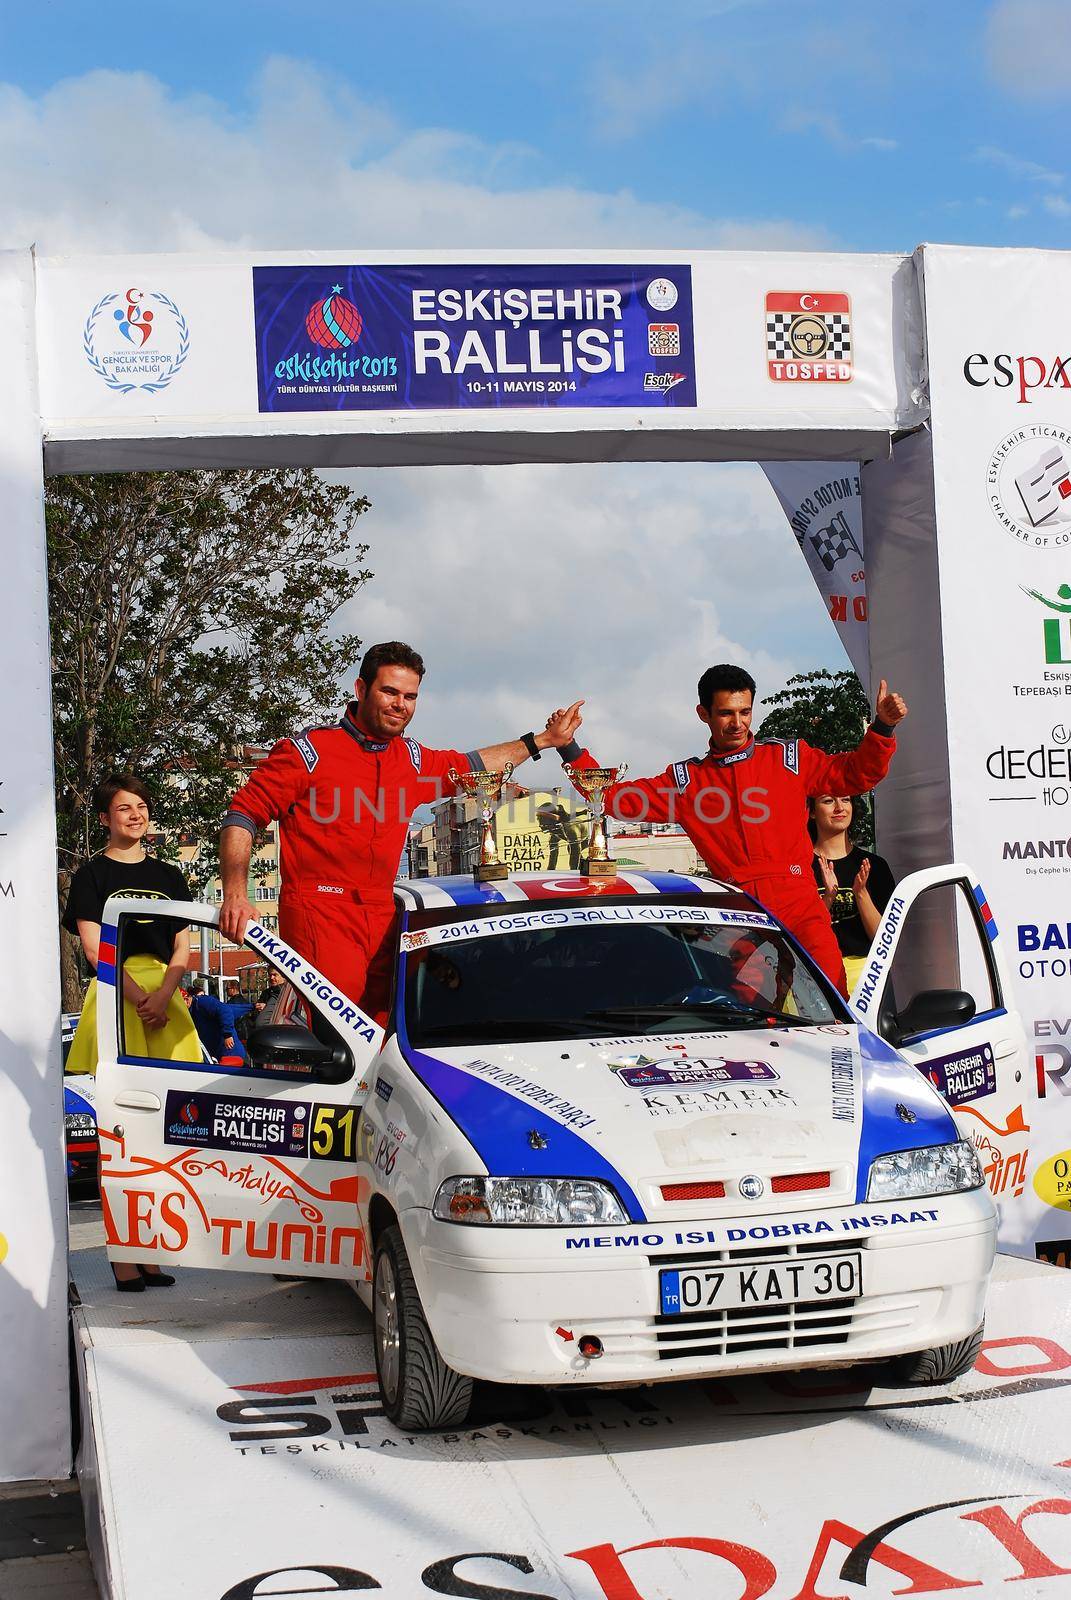 11 May 2013, Eskisehir Turkey. Eskisehir Rally Competitors on the finish tag celebrating by tasci